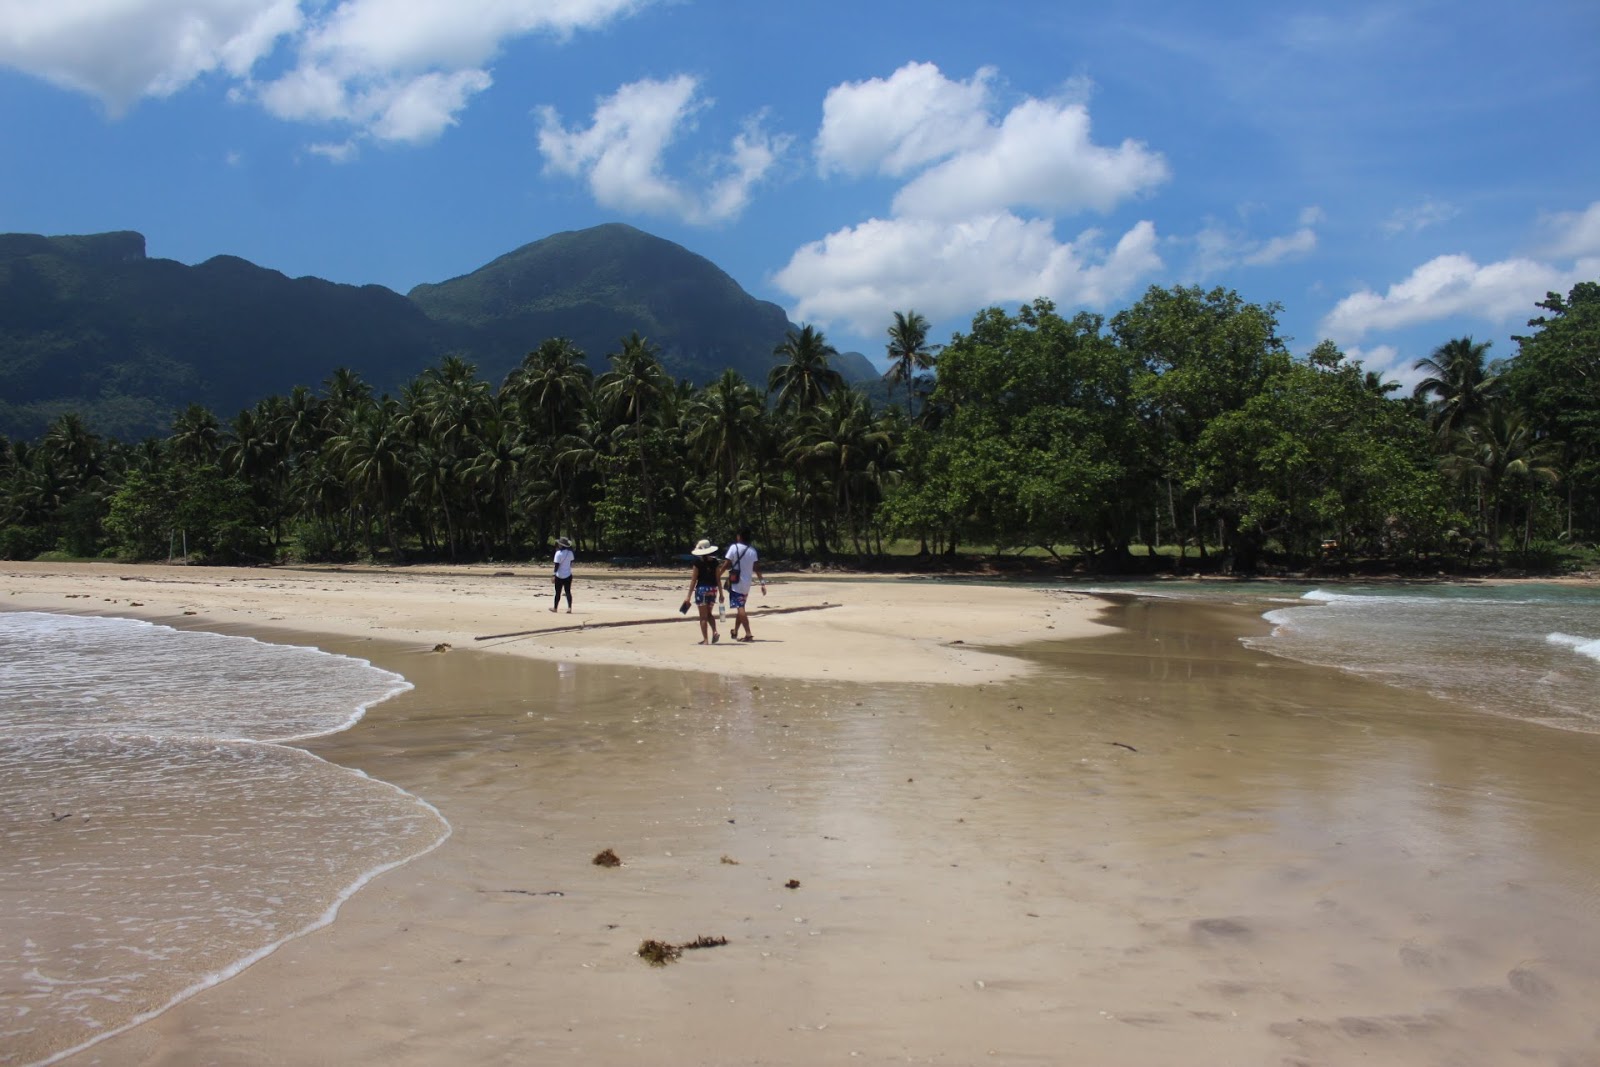 Foto di Manlipien Beach ubicato in zona naturale